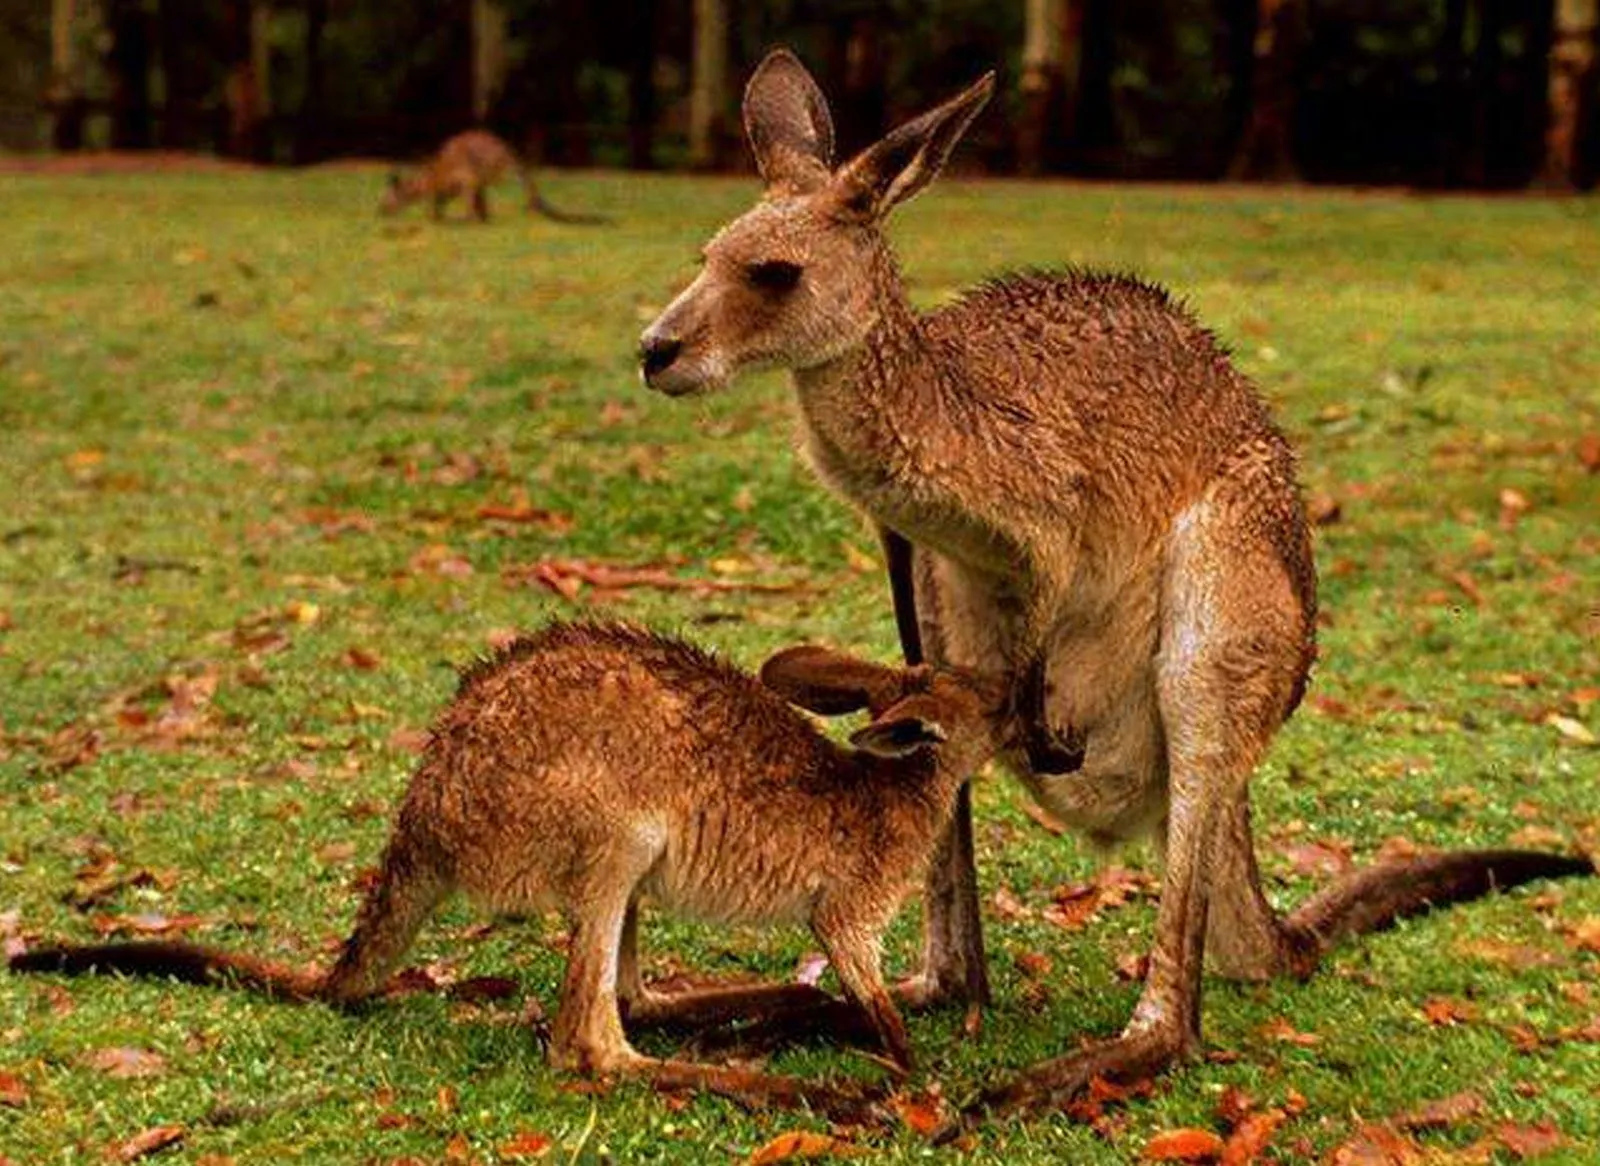 HELEN FROM SYDNEY: ANIMALES AUSTRALIANOS QUE QUIERO VER